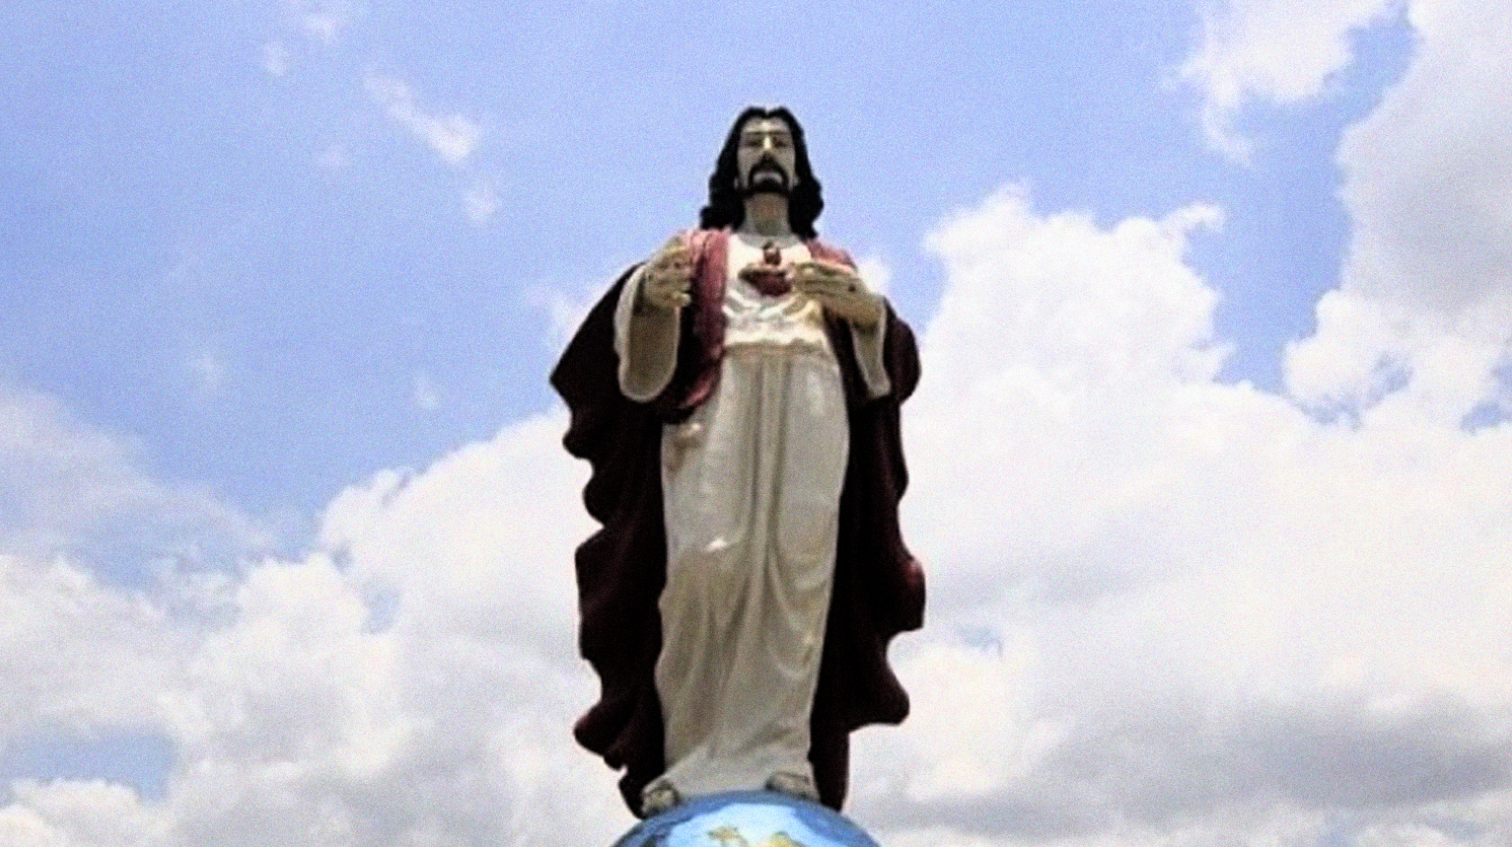 Patung Hati Kudus Yesus di kompleks Bandar Udara Mopah Merauke, Papua. Patung itu mempunyai tinggi sekitar 17 meter. (Foto: antara)